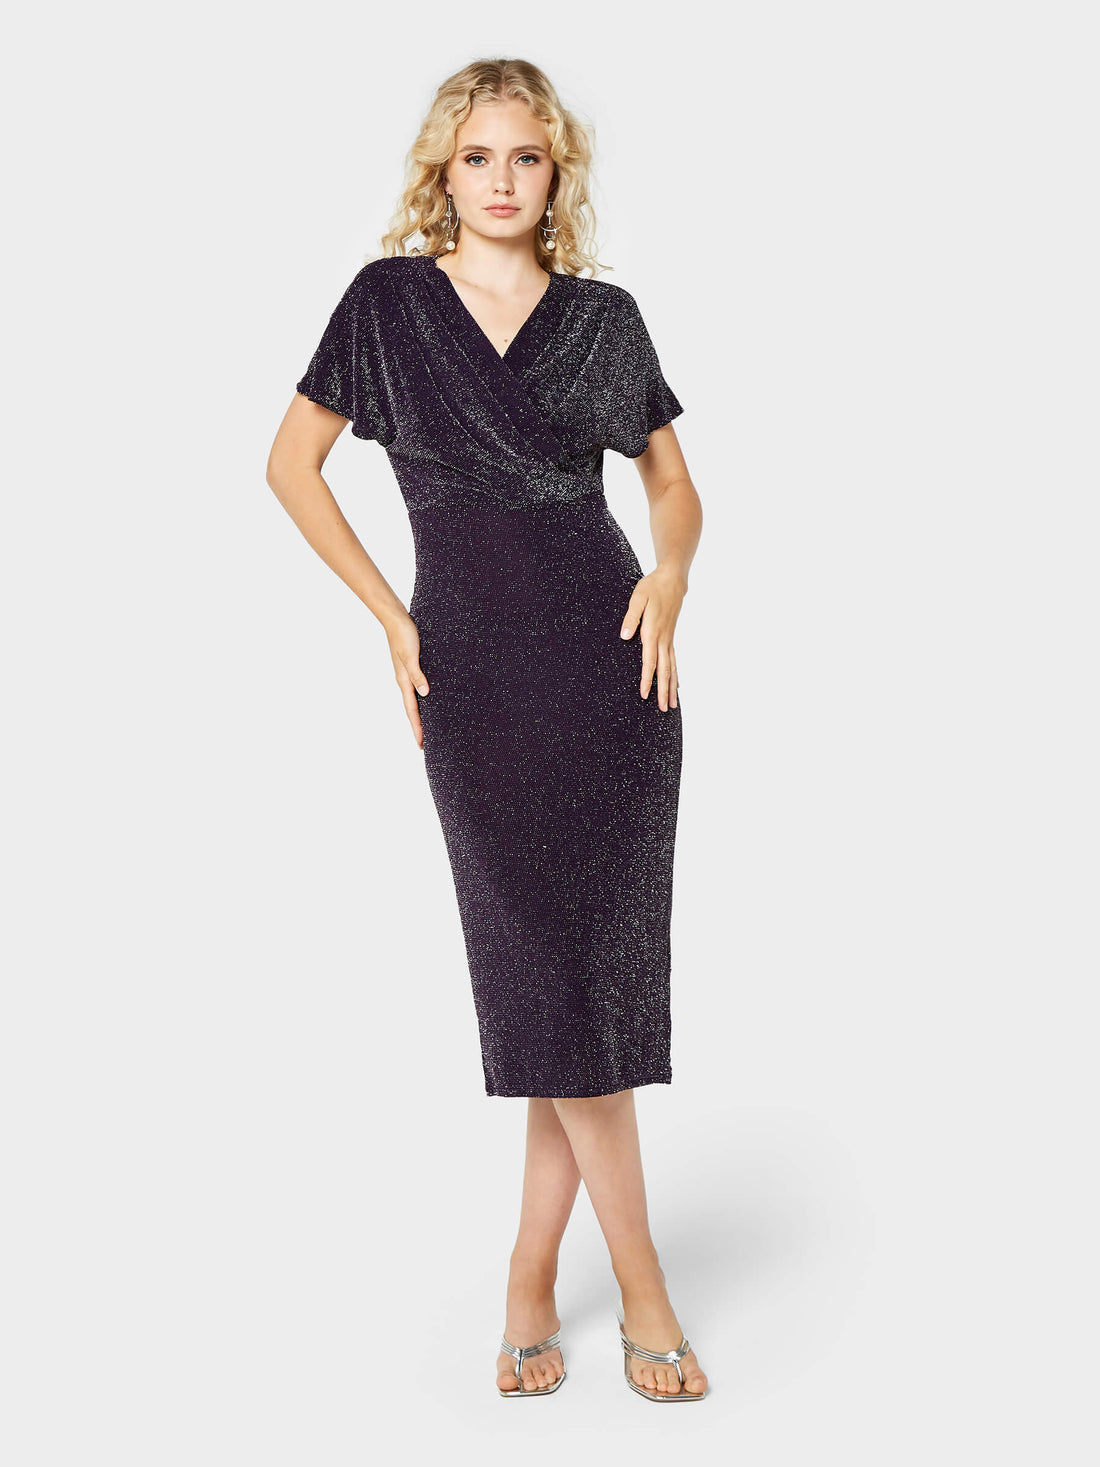 Lilly Sparkle Dress | GWD Fashion